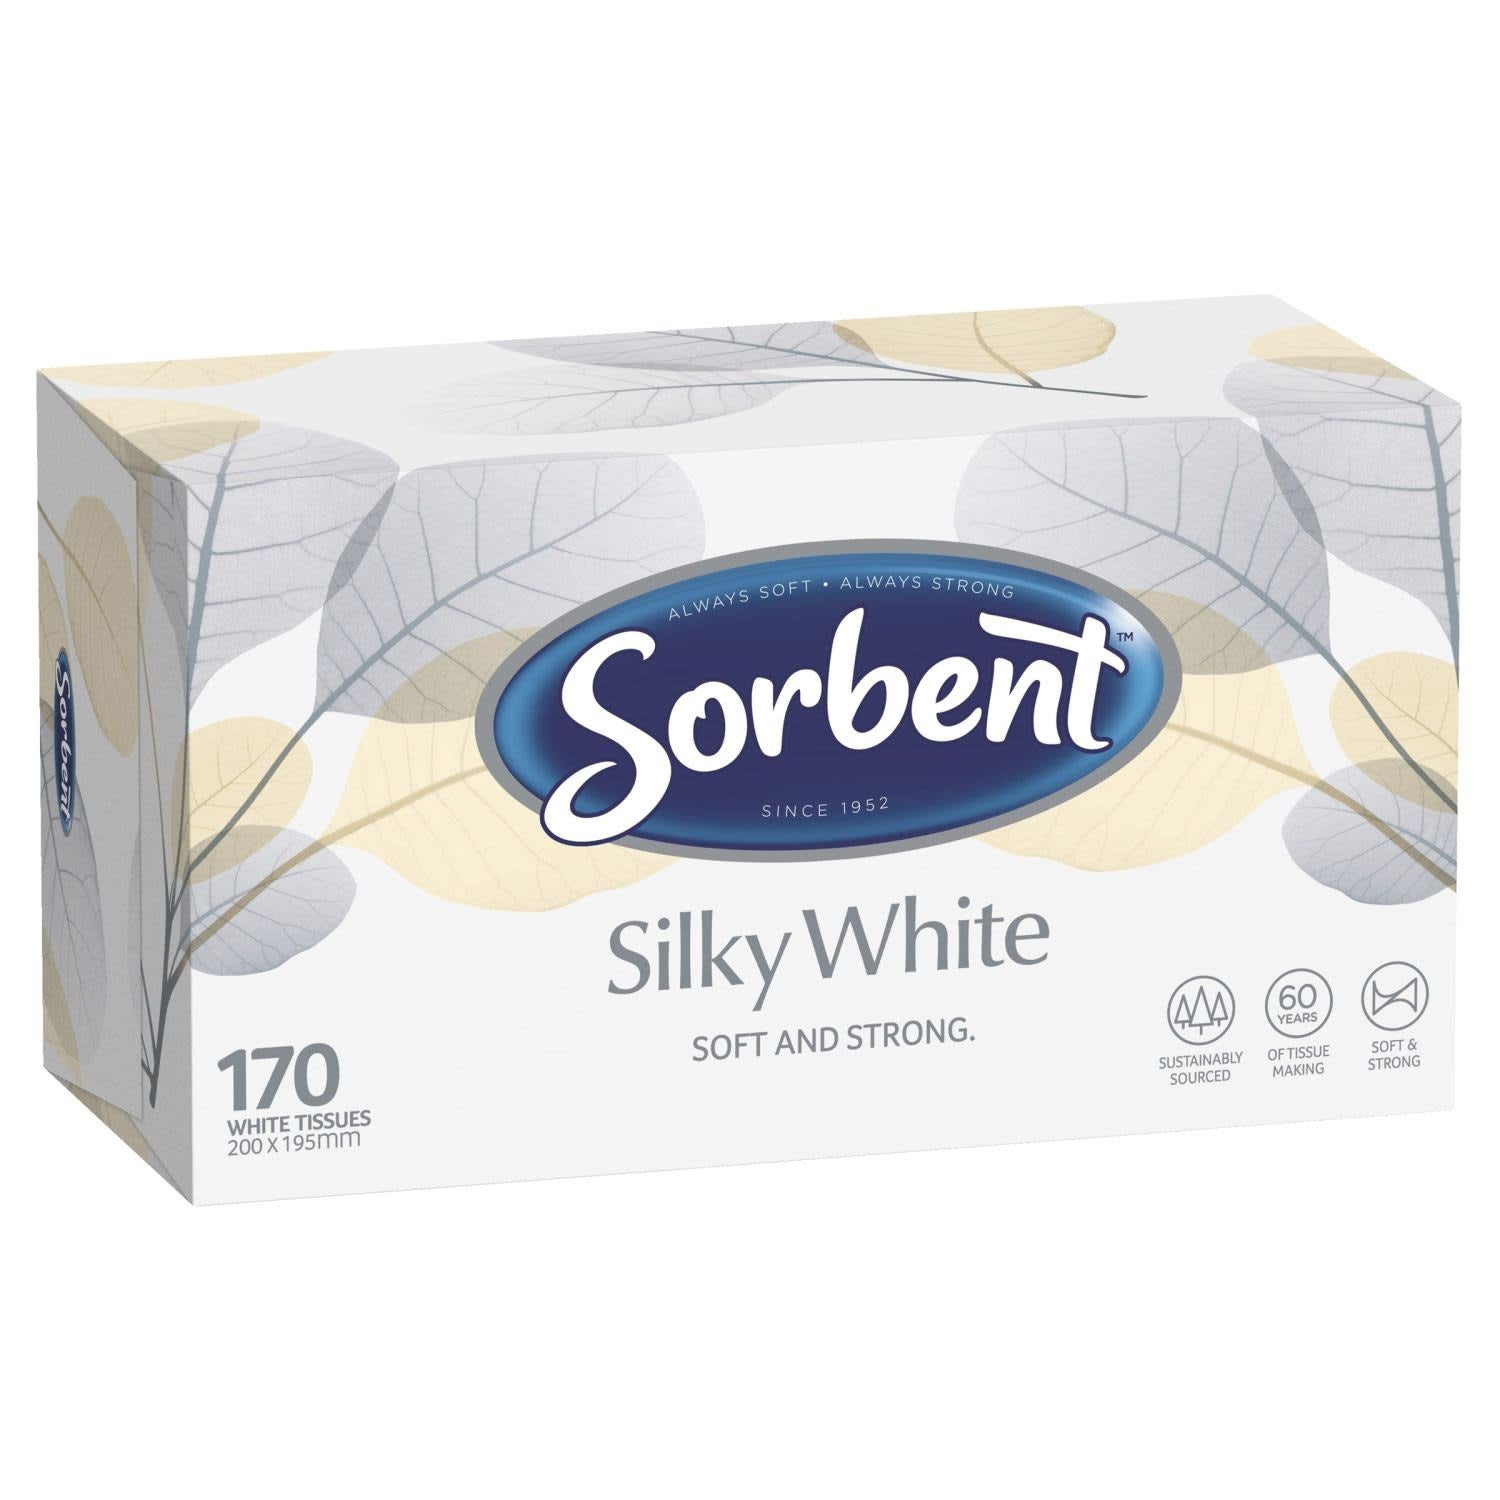 Sorbent Facial Tissues Silky White 170 Sheets